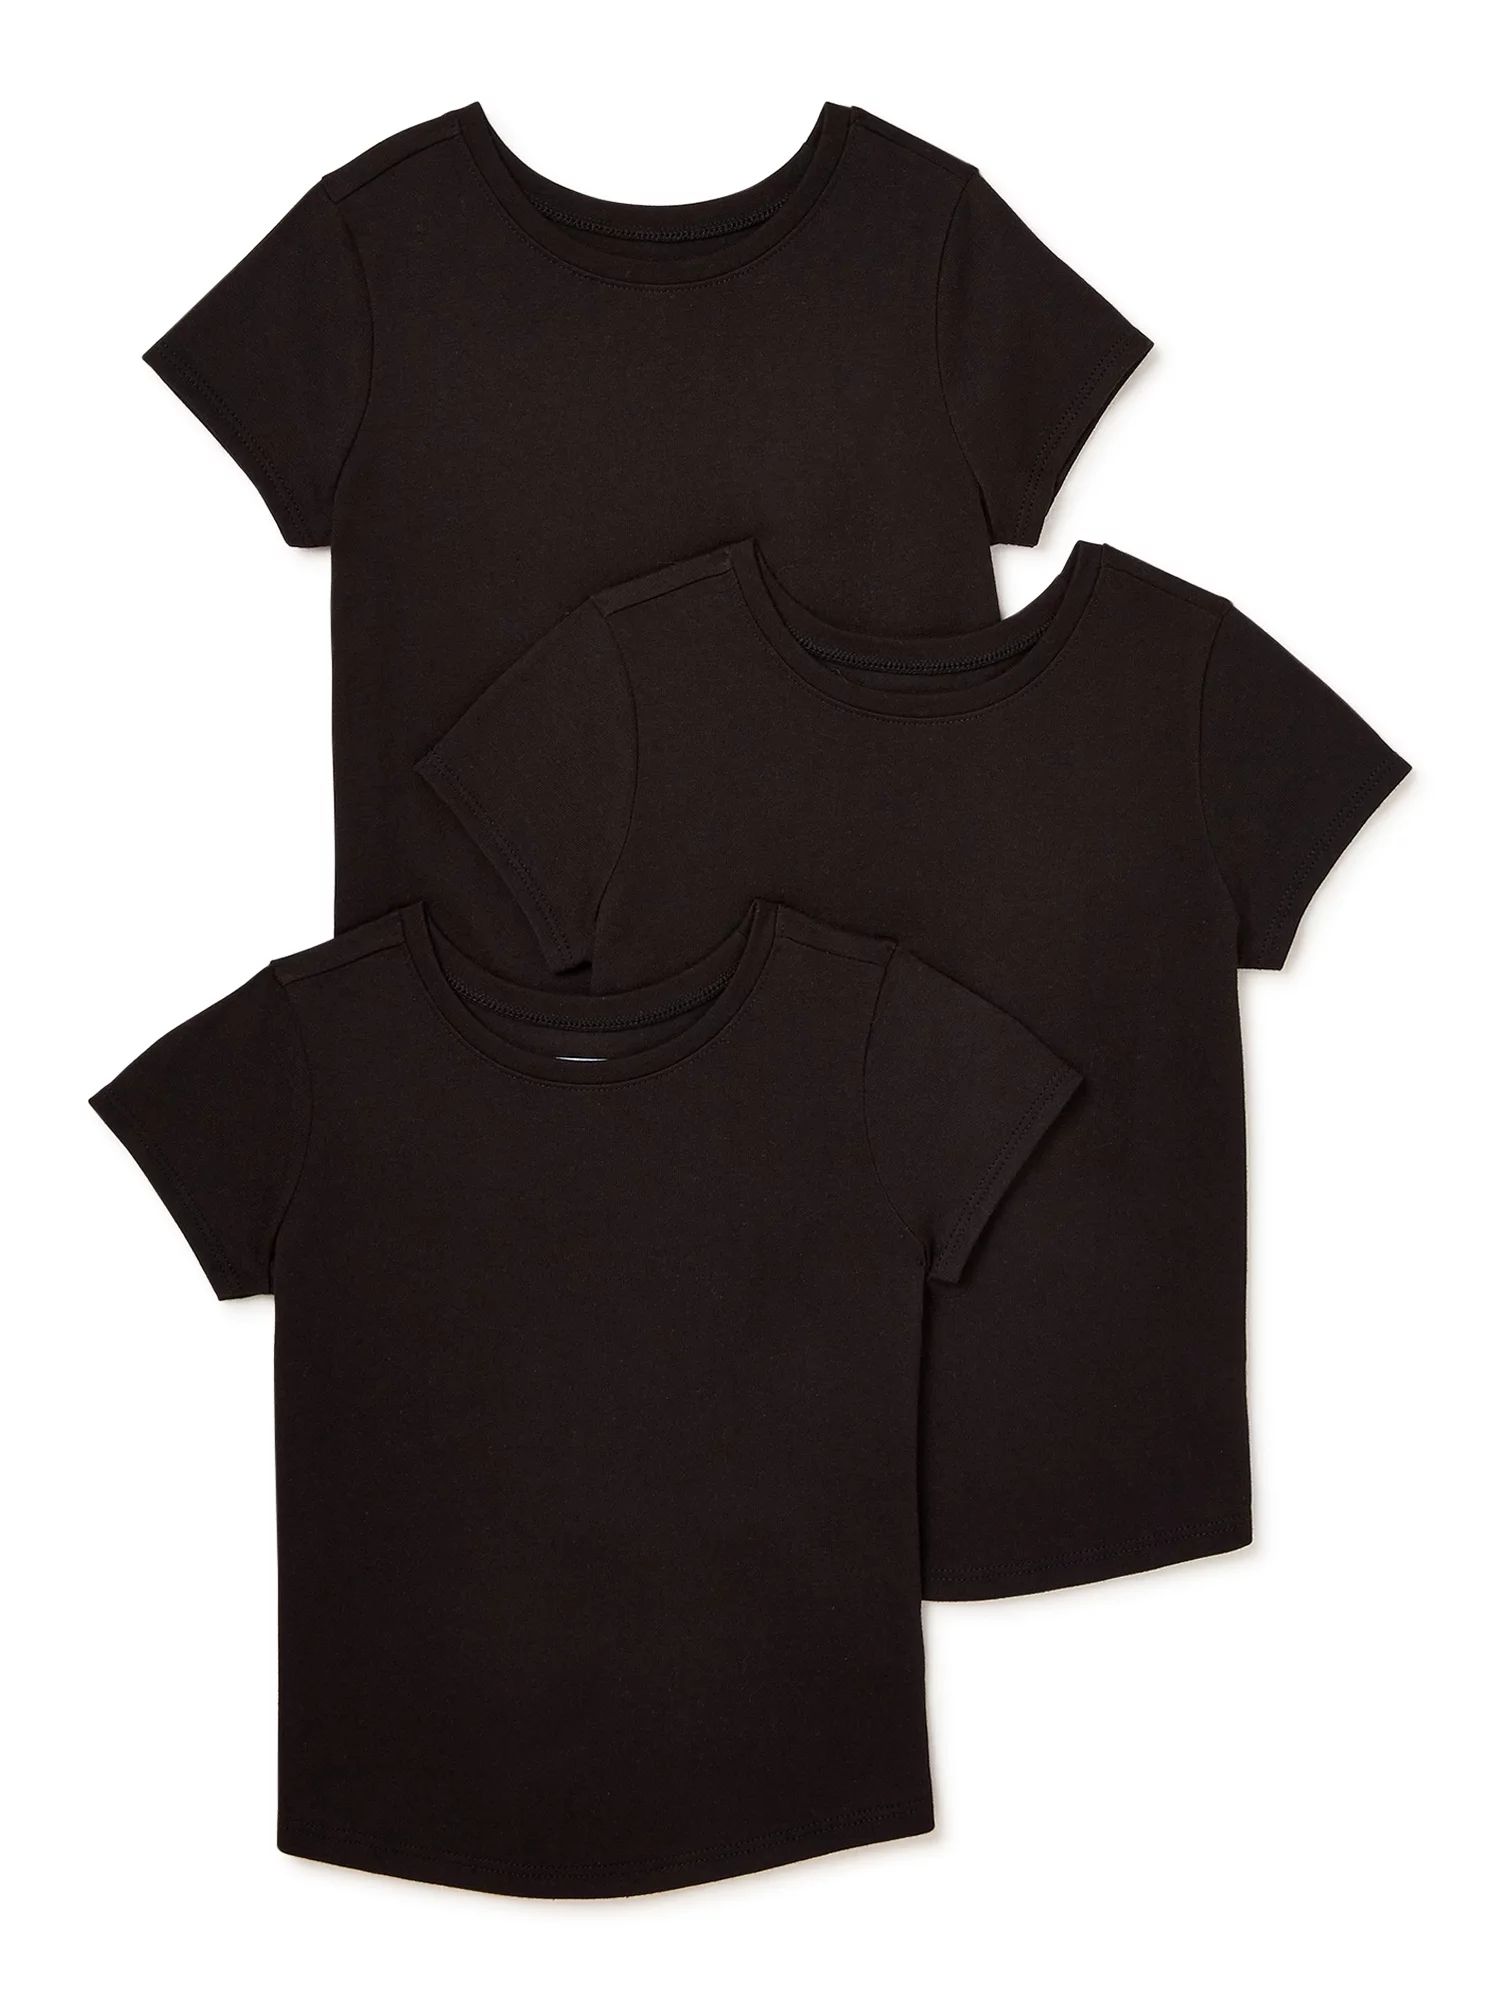 Garanimals Baby and Toddler Girls' Short Sleeve T-Shirt, 3-Pack, Sizes 12M-5T | Walmart (US)